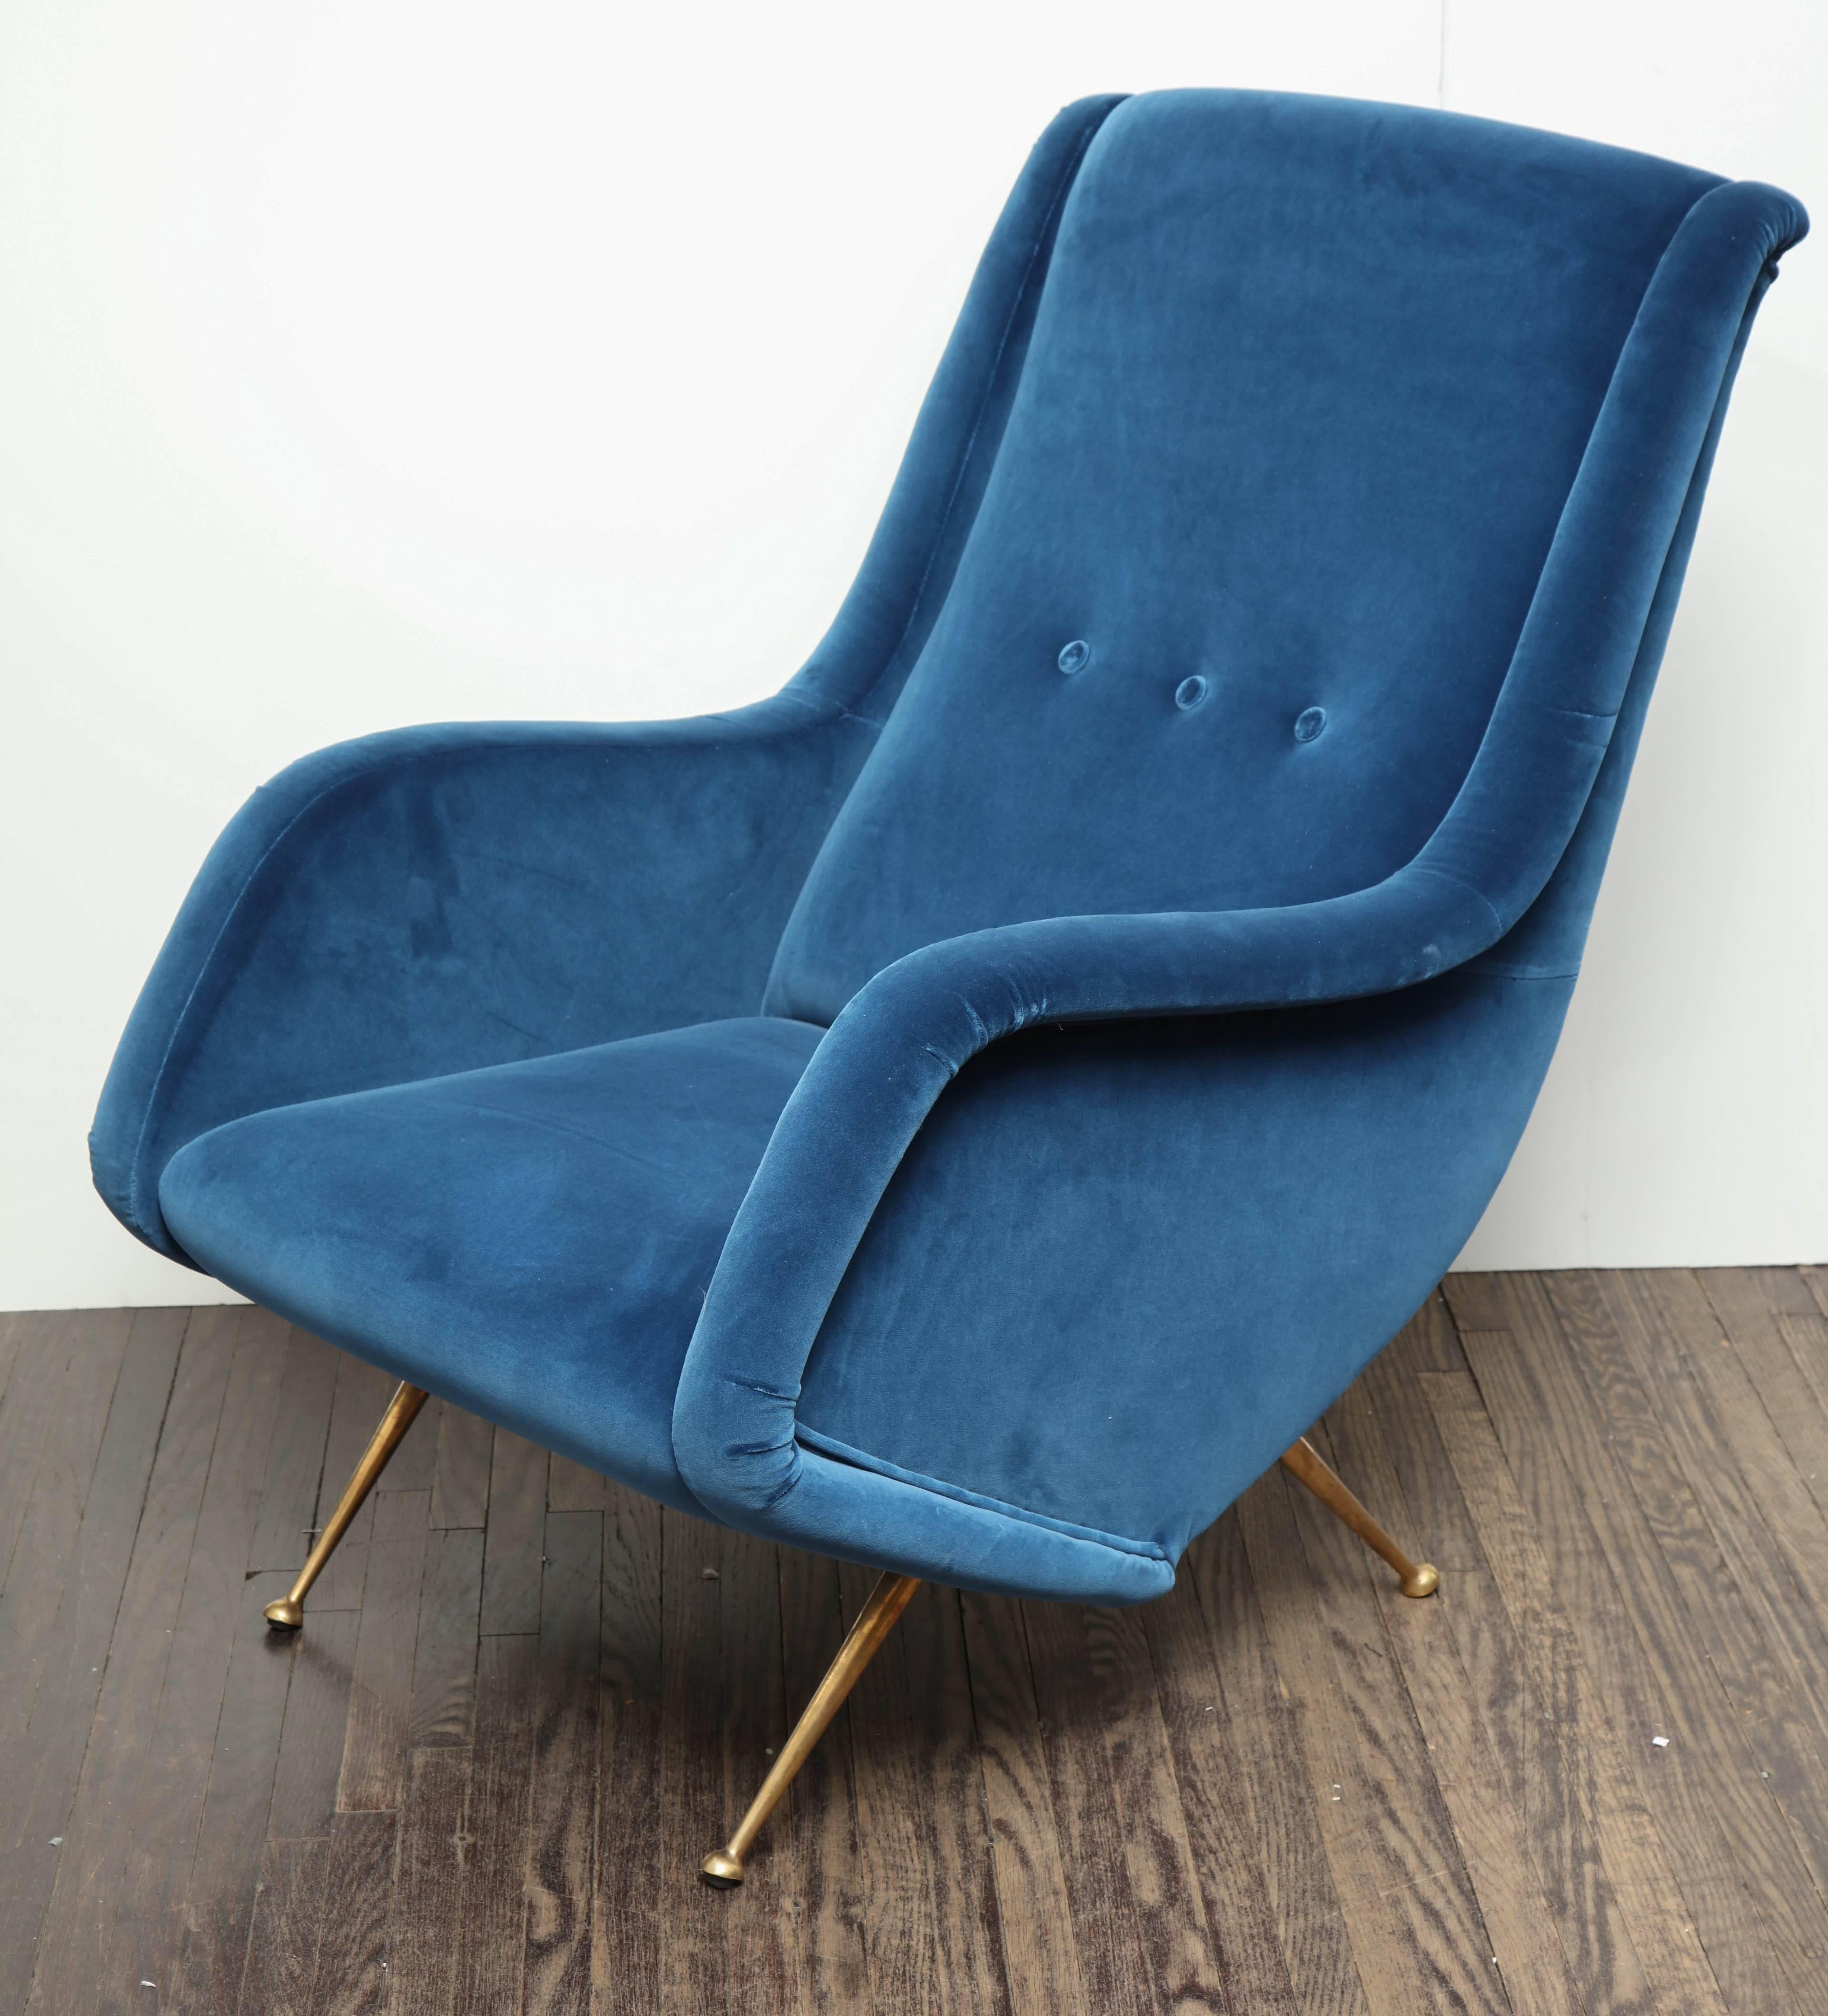 Pair of Parisi Vintage Italian Club Chairs Upholstered in Teal Blue Velvet 2